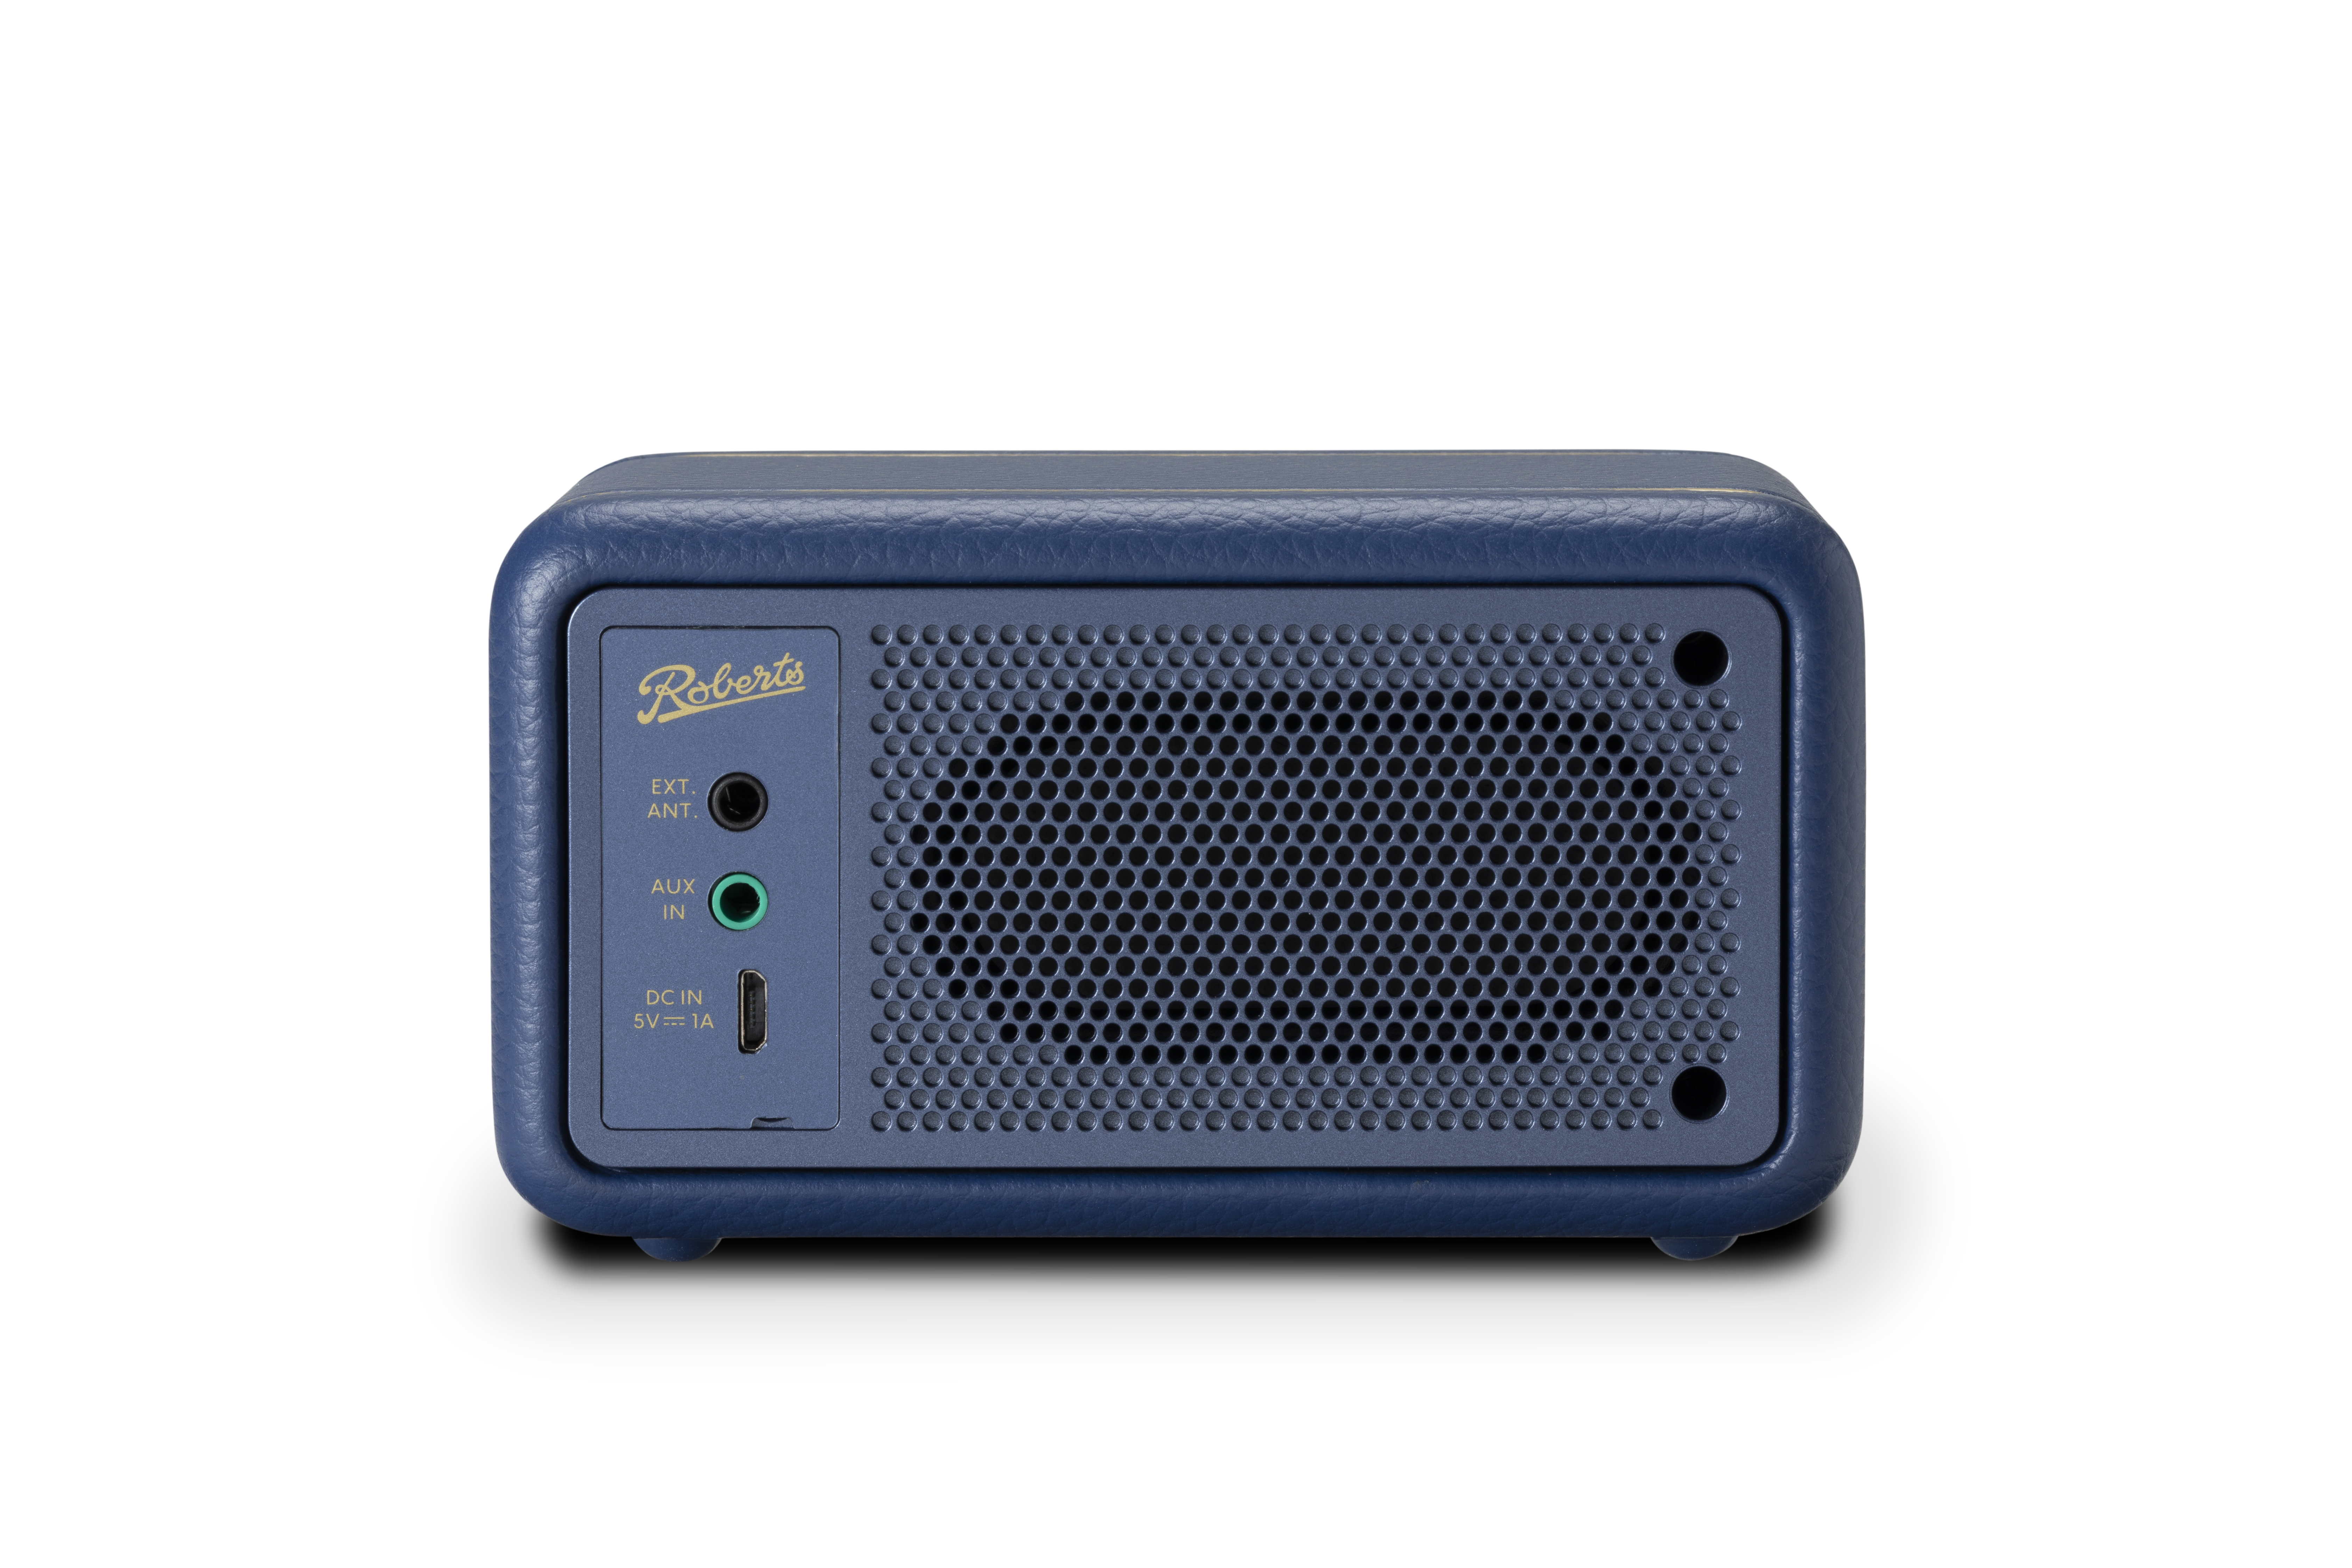 ROBERTS RADIO Revival Blau midnight DAB+ Petite integriertem / DAB+, Bluetooth mit | Digitalradio, blue Akku tragbares FM Radio | und